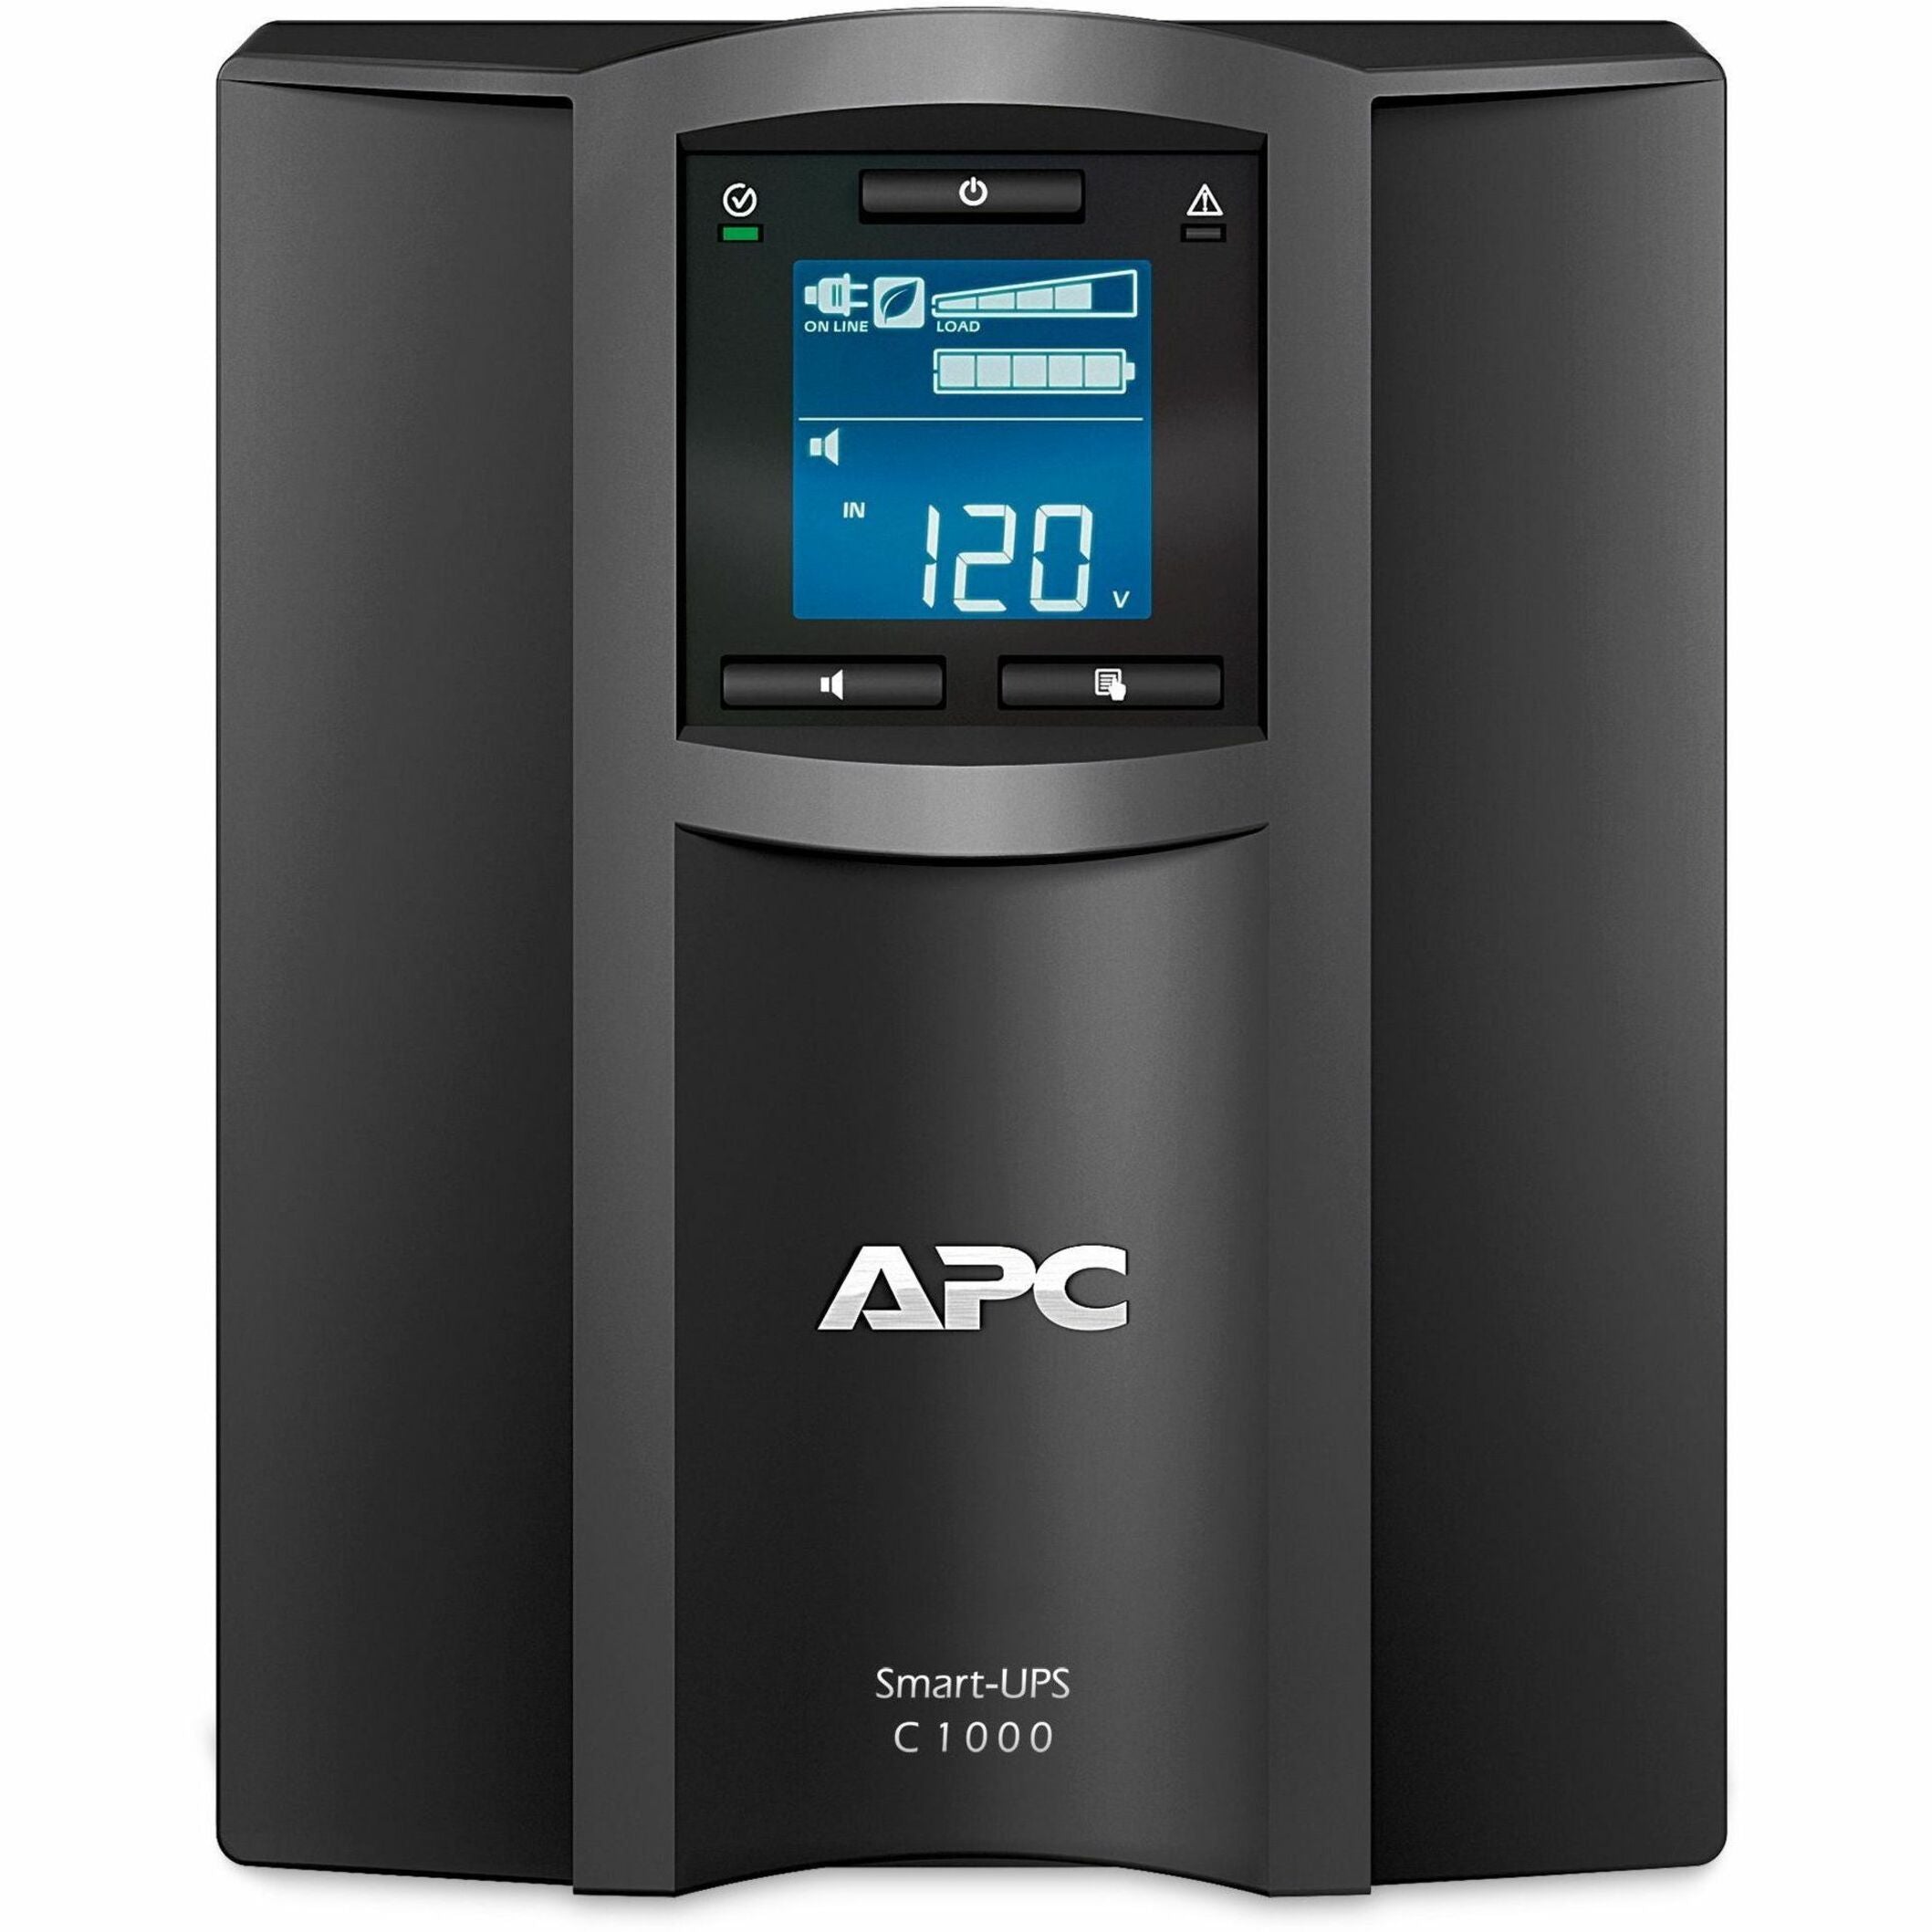 APC SMC1000C Smart-UPS C 1000VA LCD 120V with SmartConnect, Energy Star, 2 Year Warranty